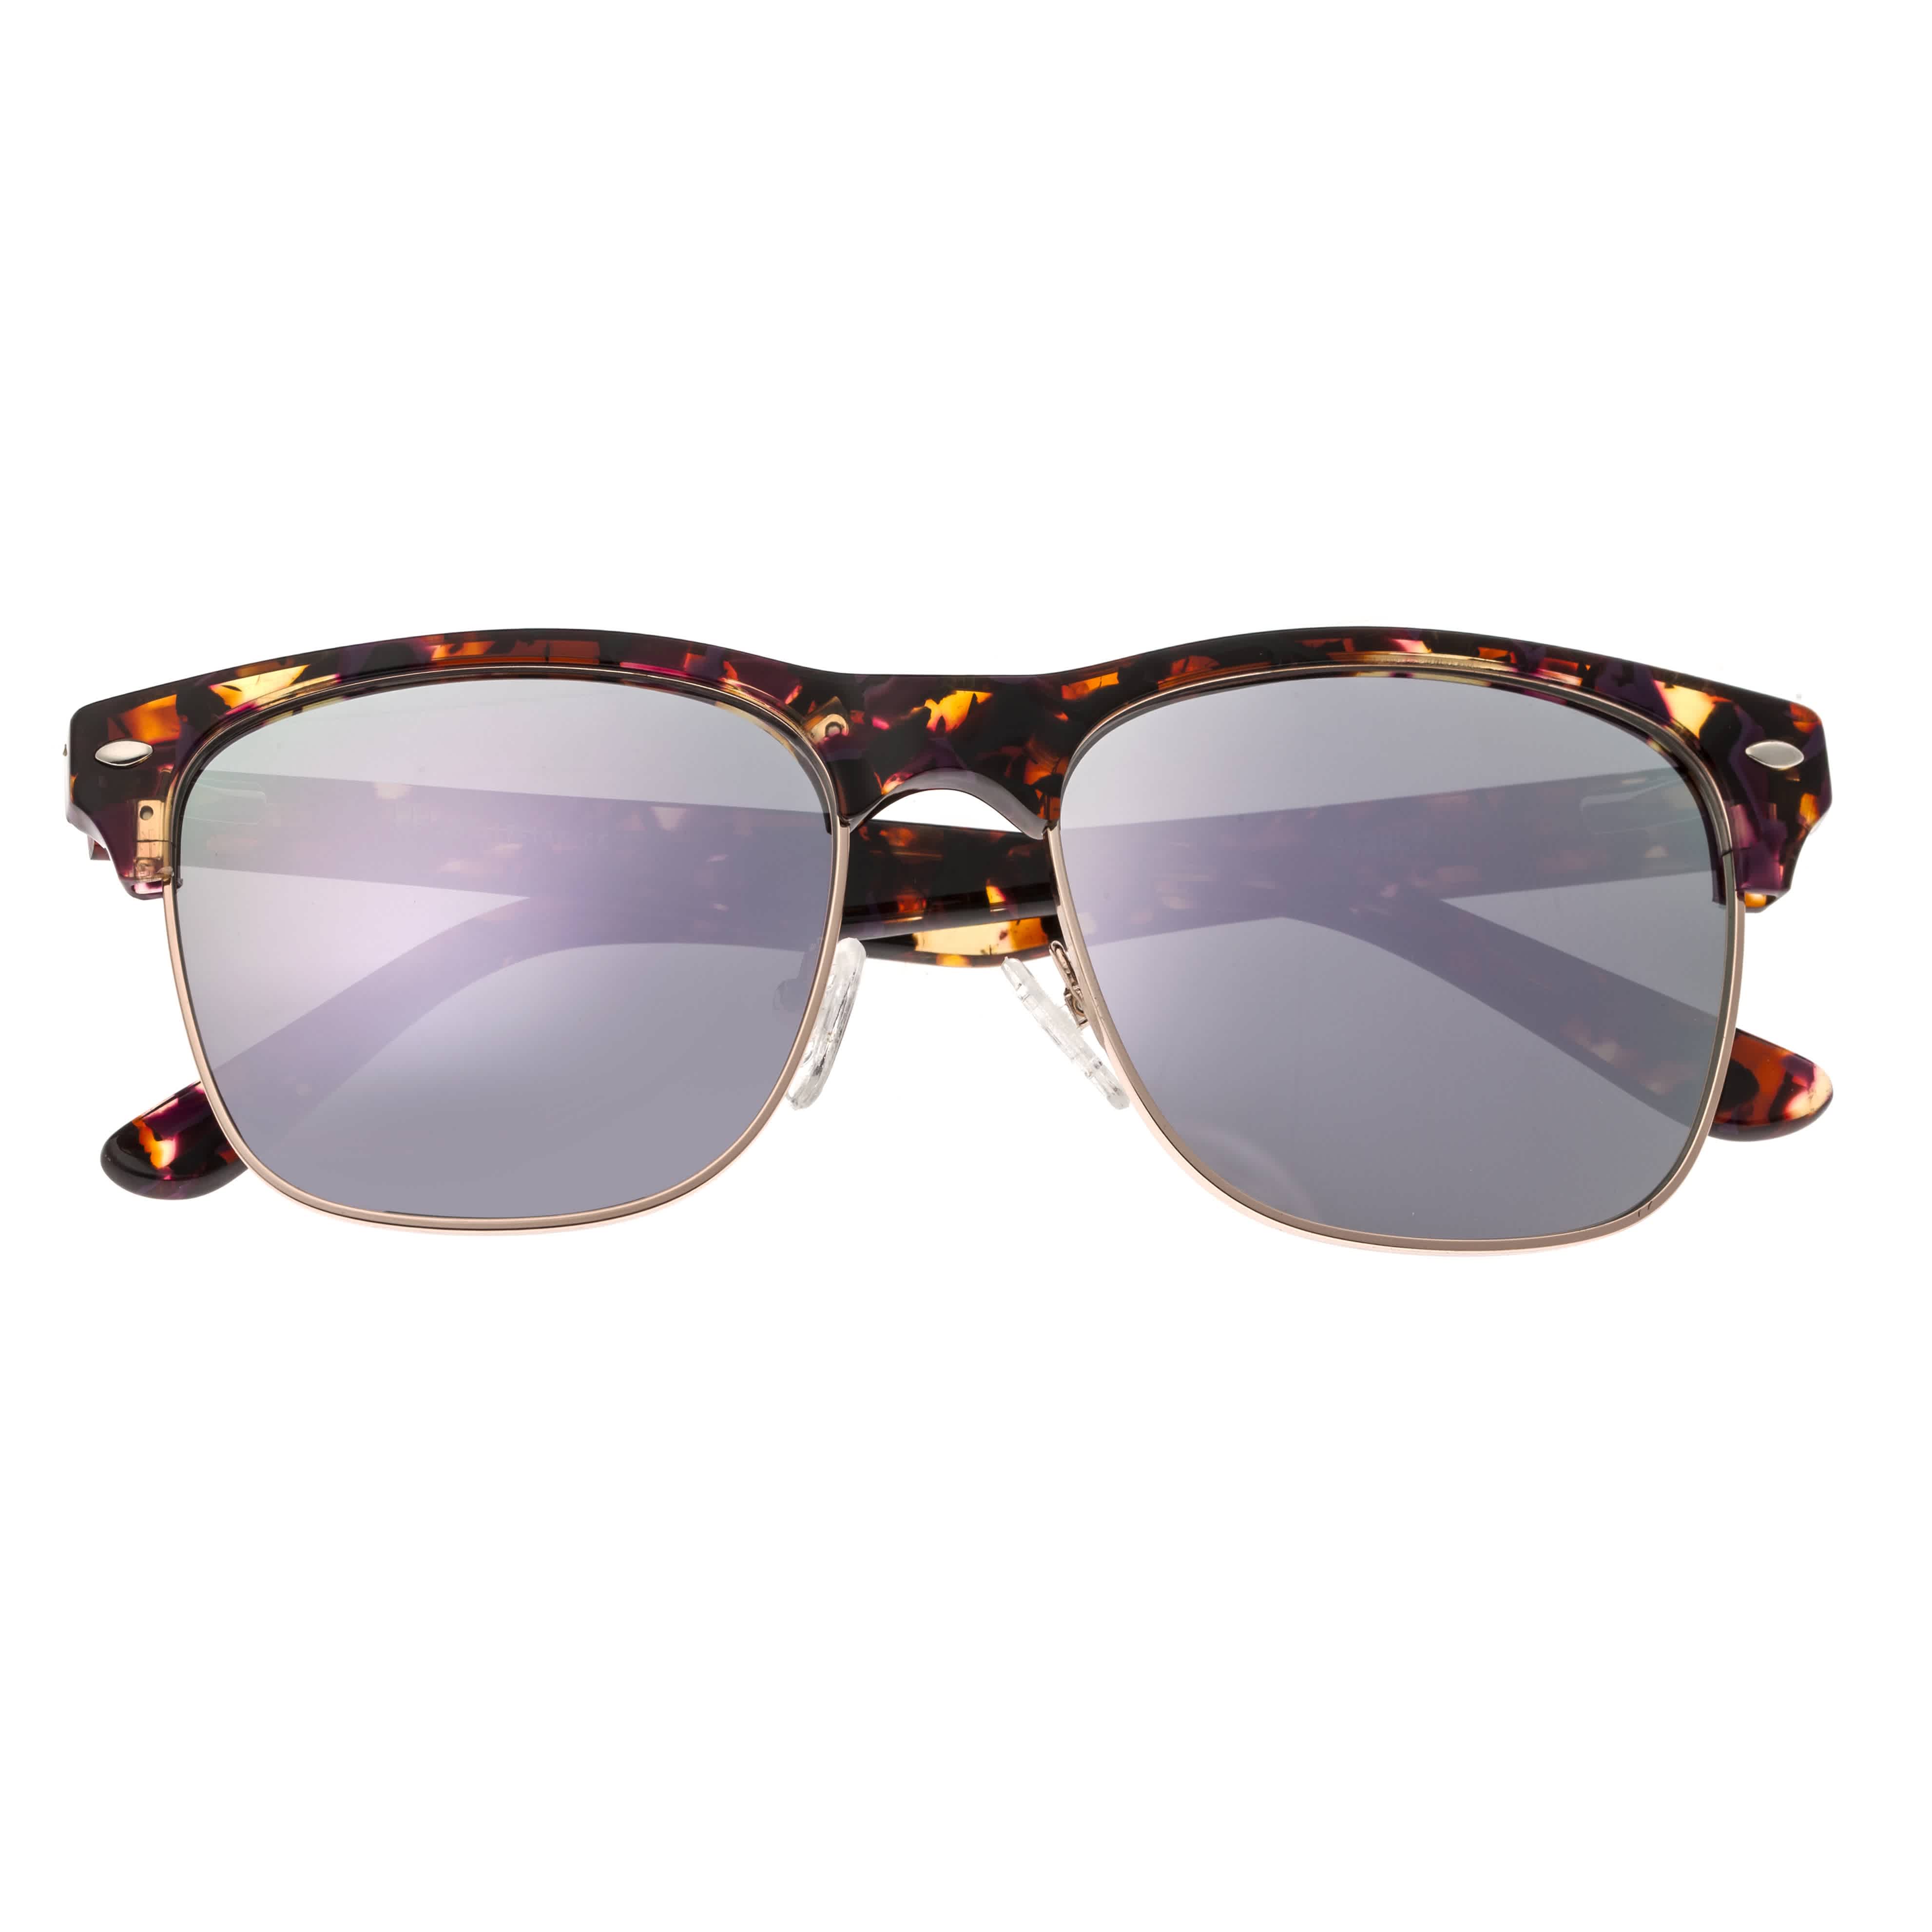 Sixty One Wajpio Light Pink Sunglasses S136lp